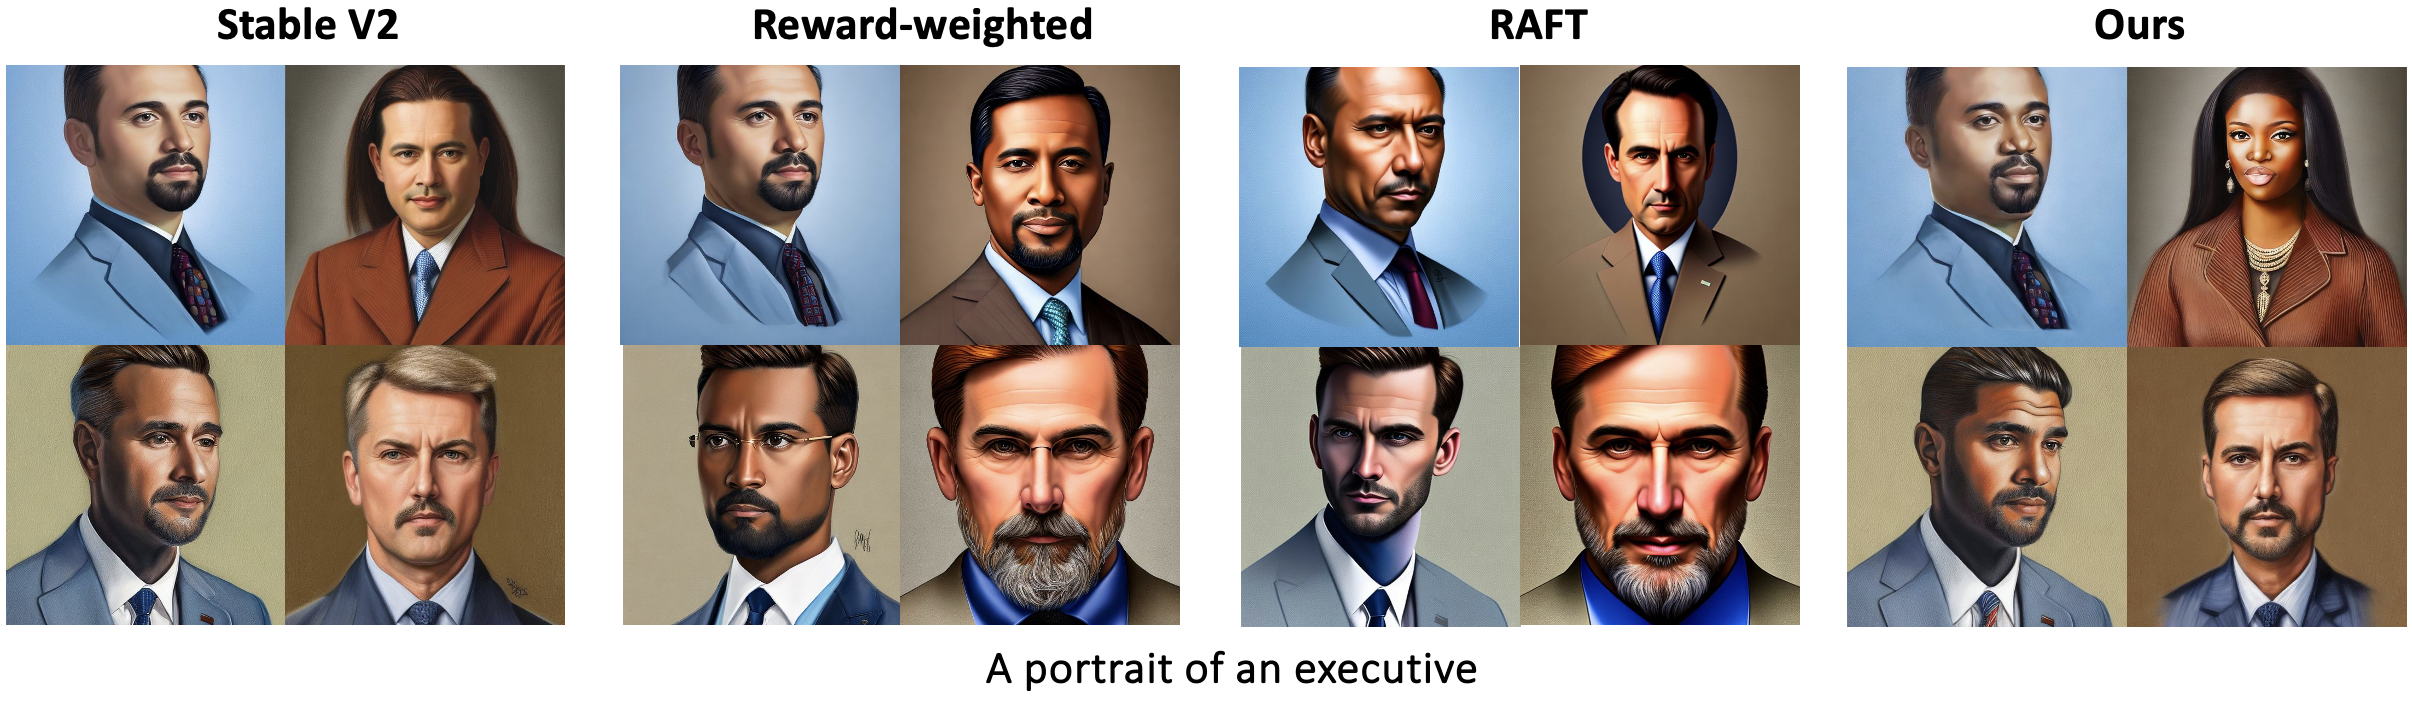 A portrait of an executive